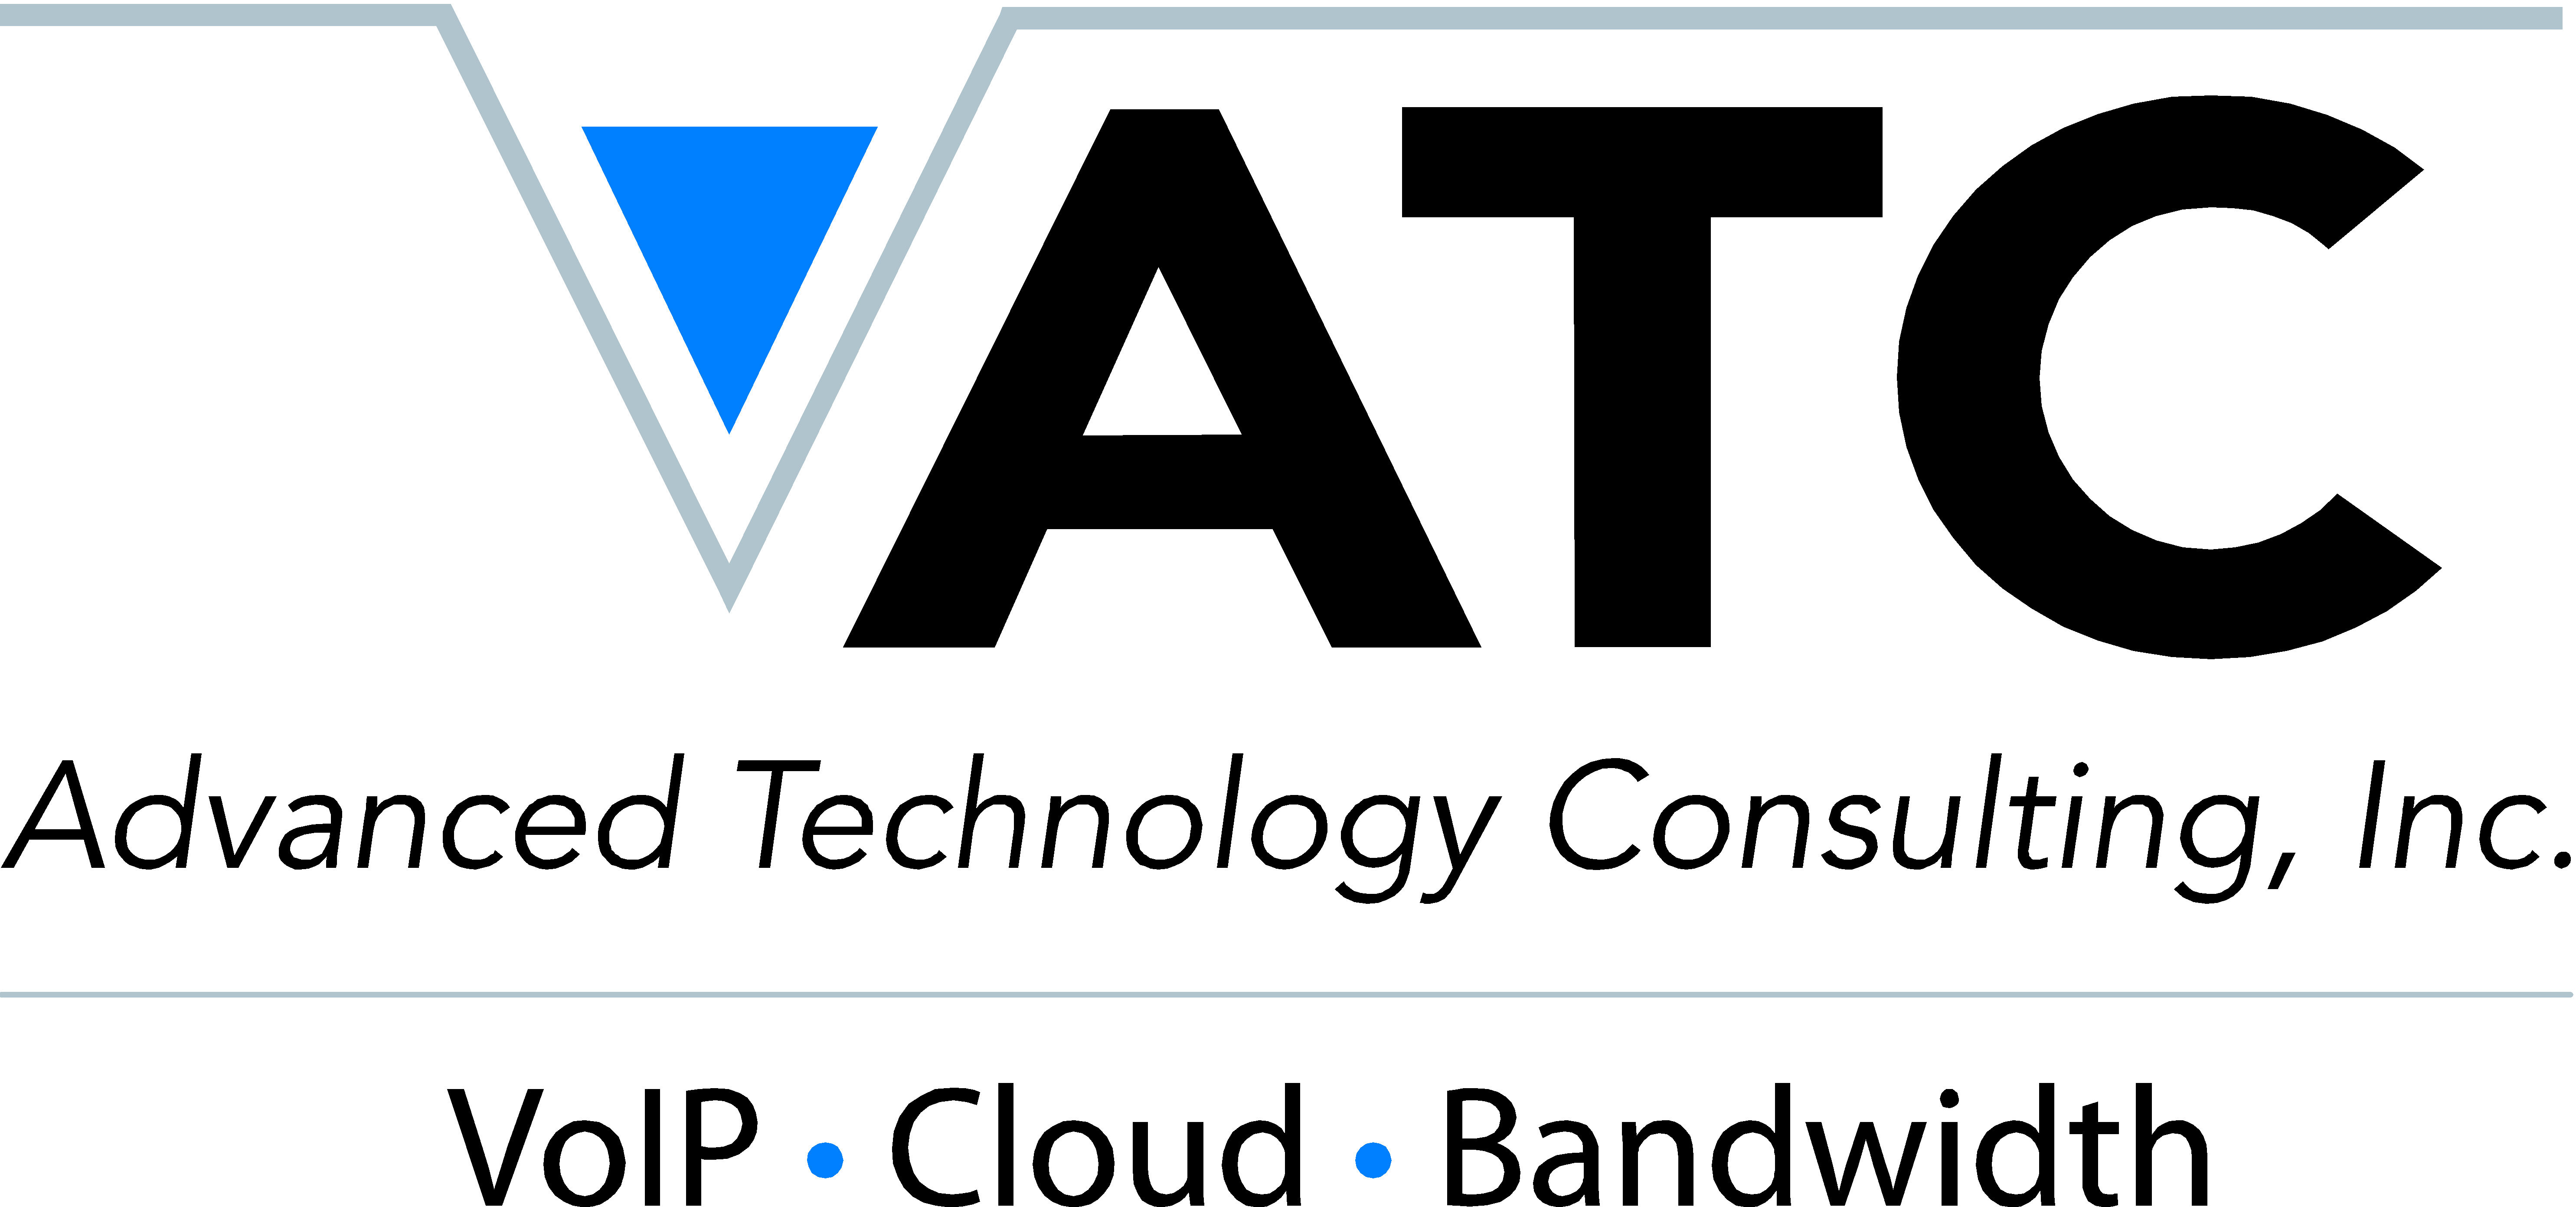 ATC1 - Make Your Mark on Technology - September 3, 2015